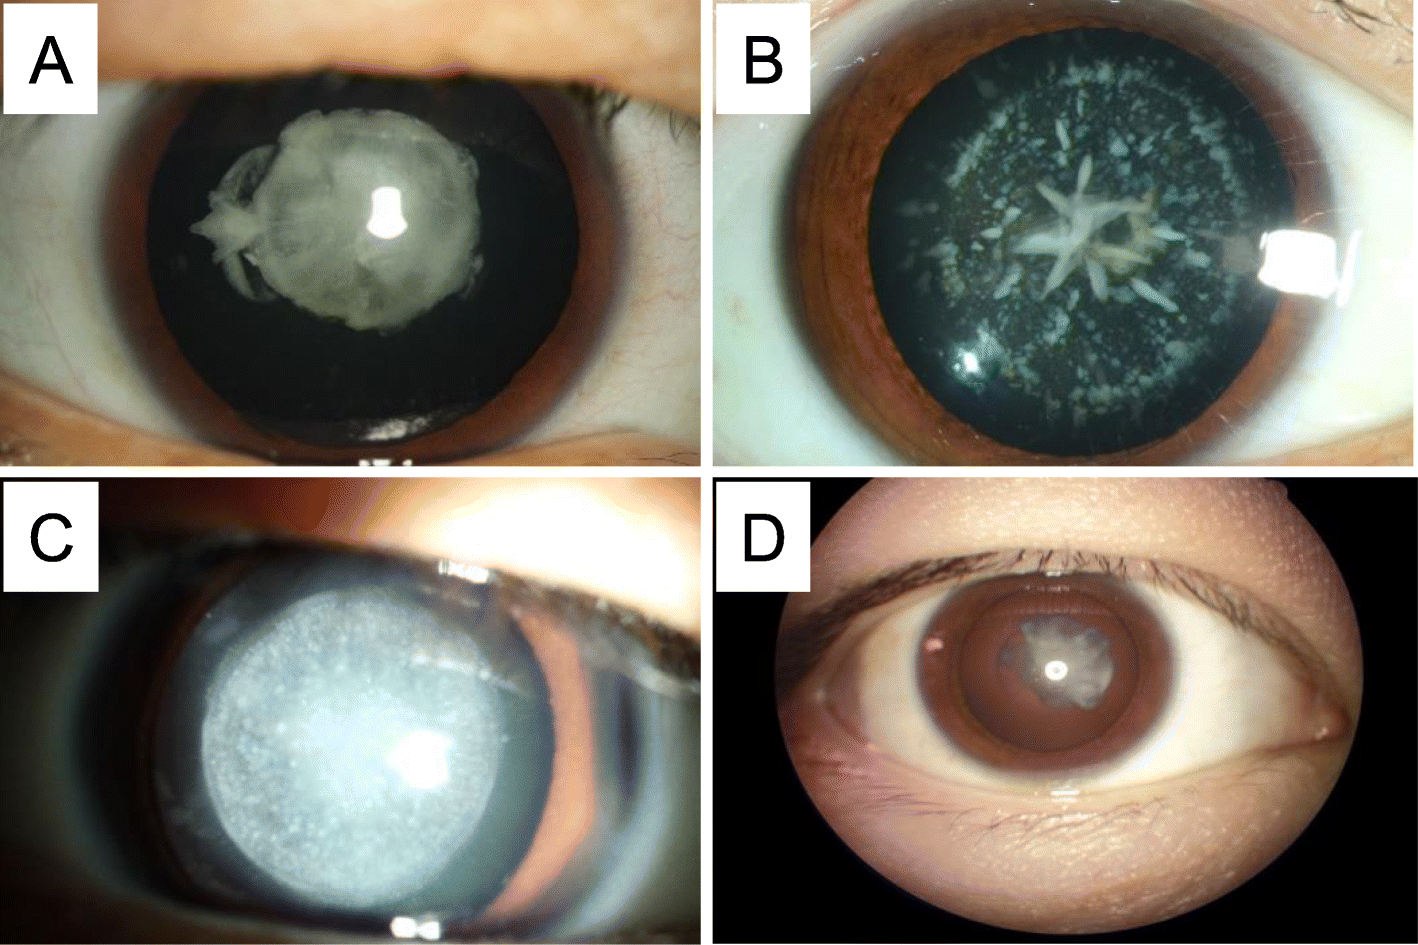 congenital cataract